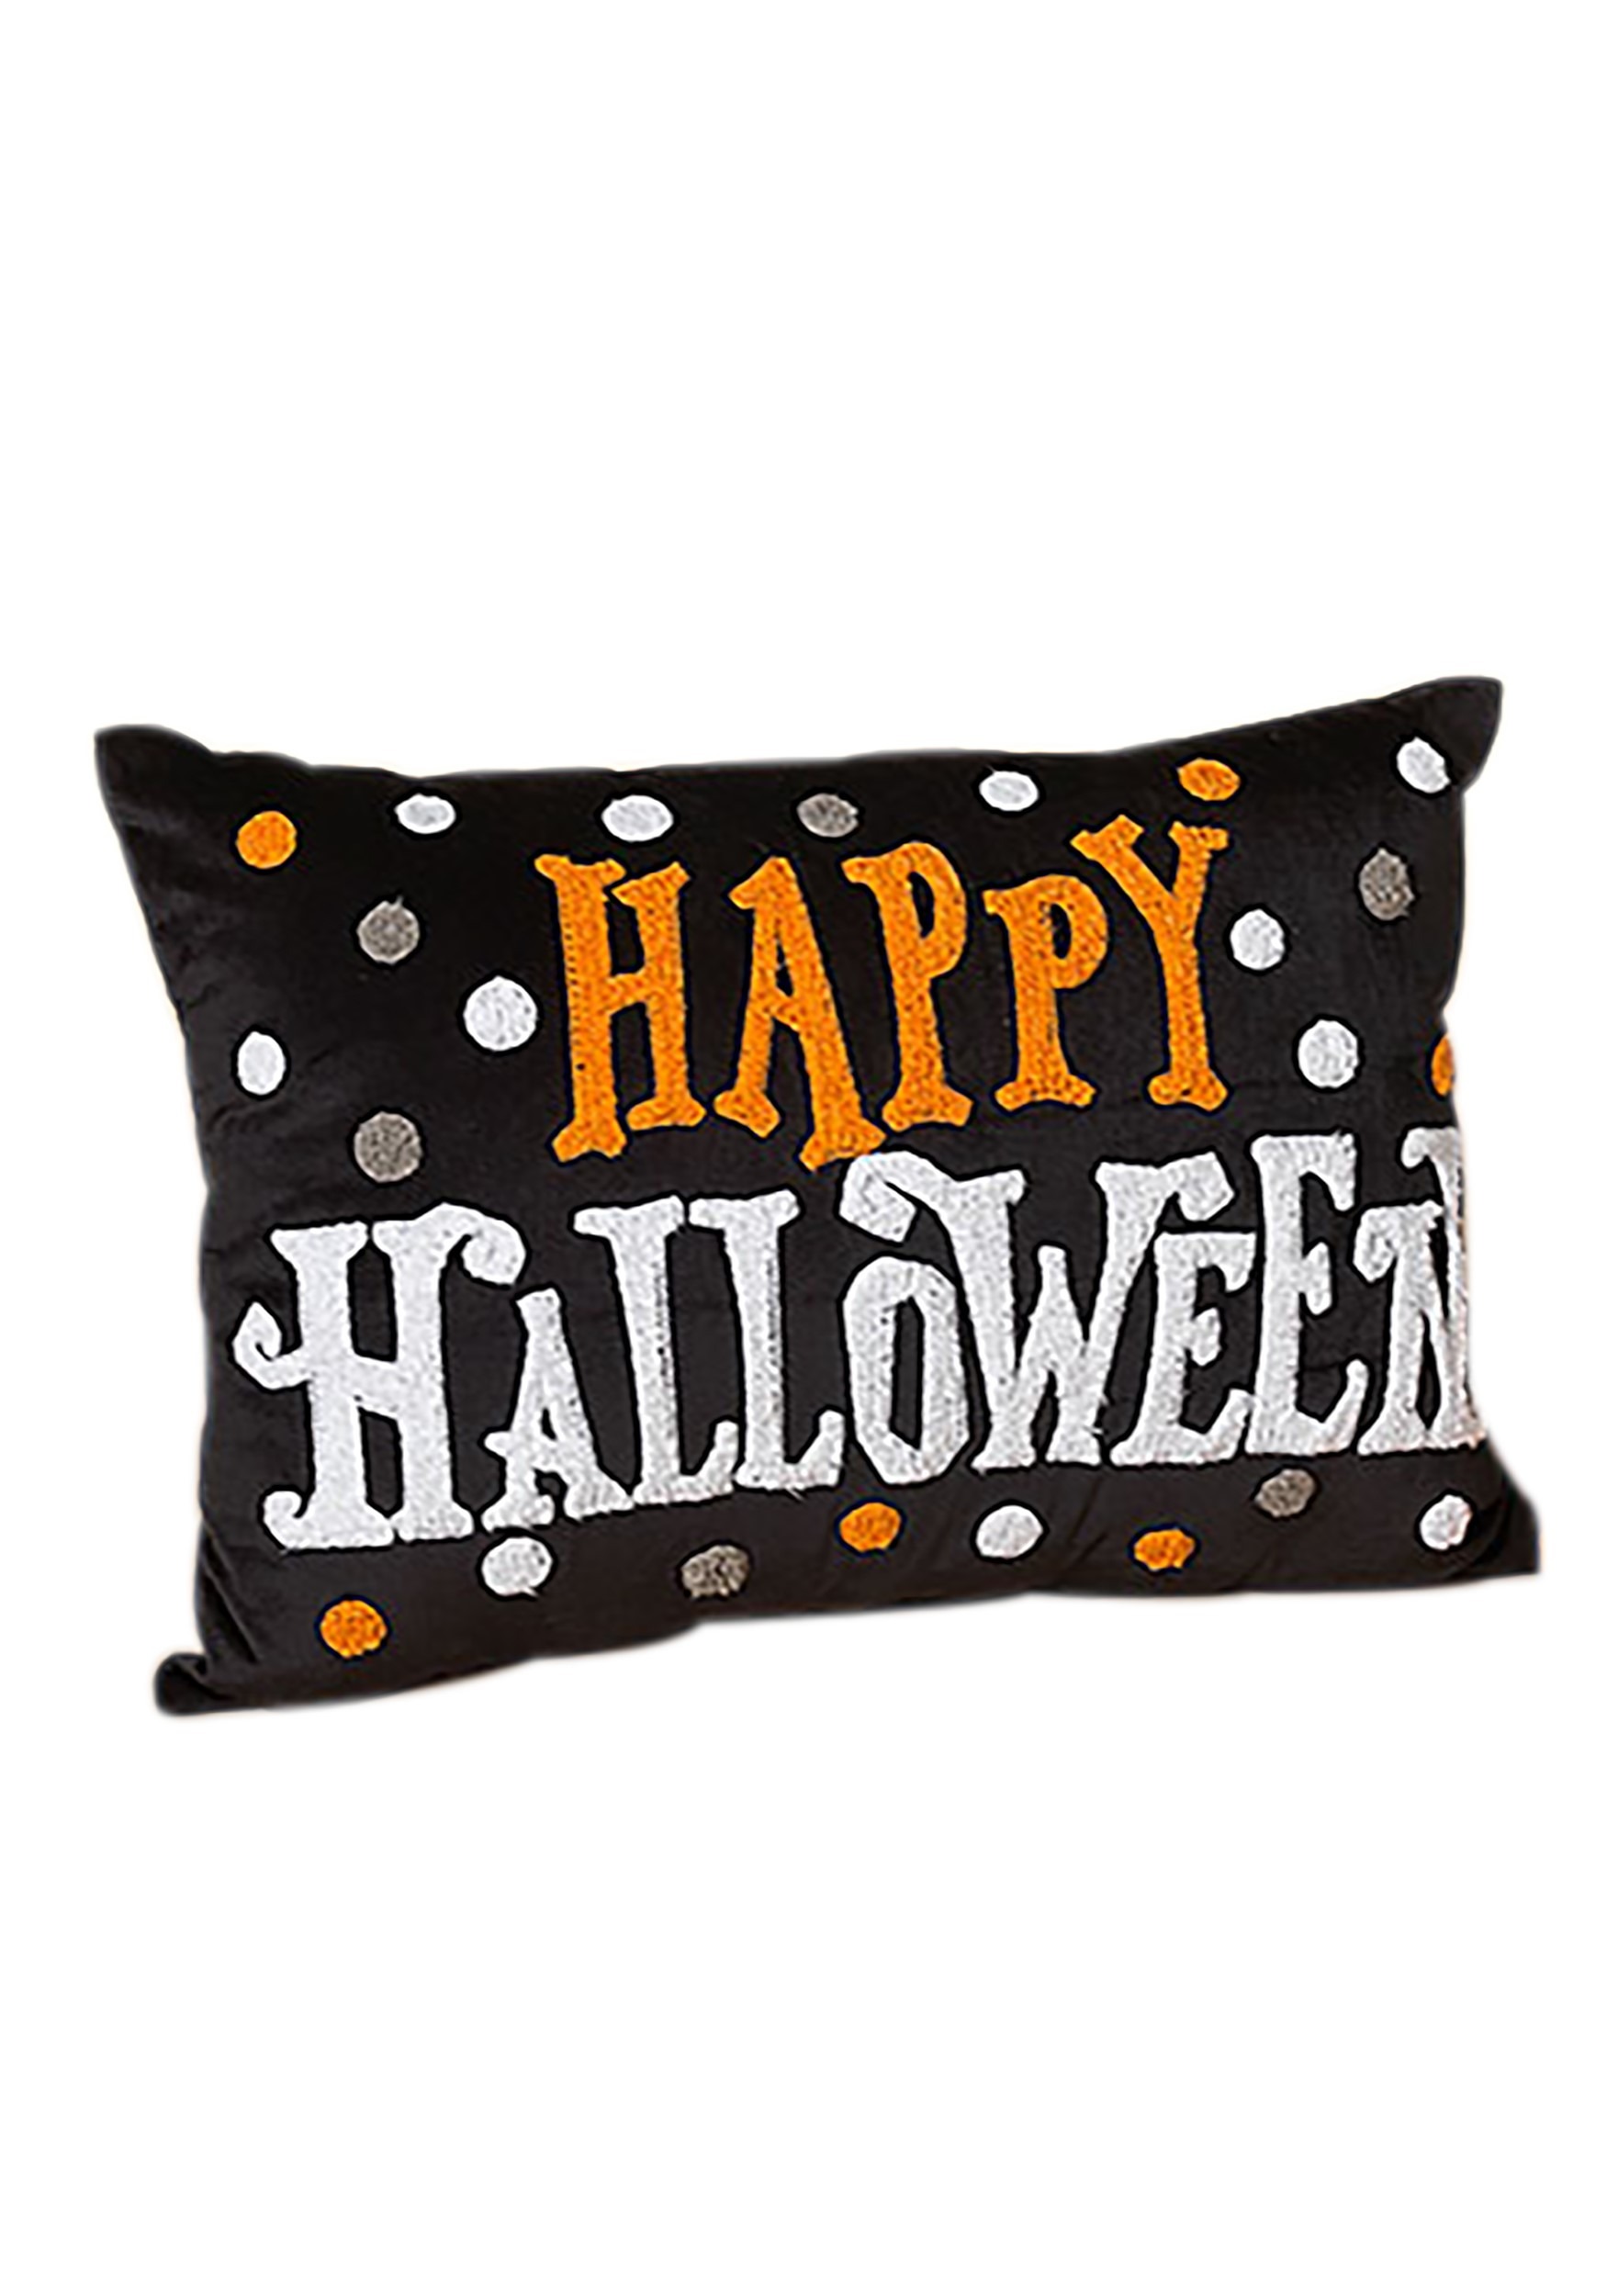 20 Fabric Happy Halloween Pillow